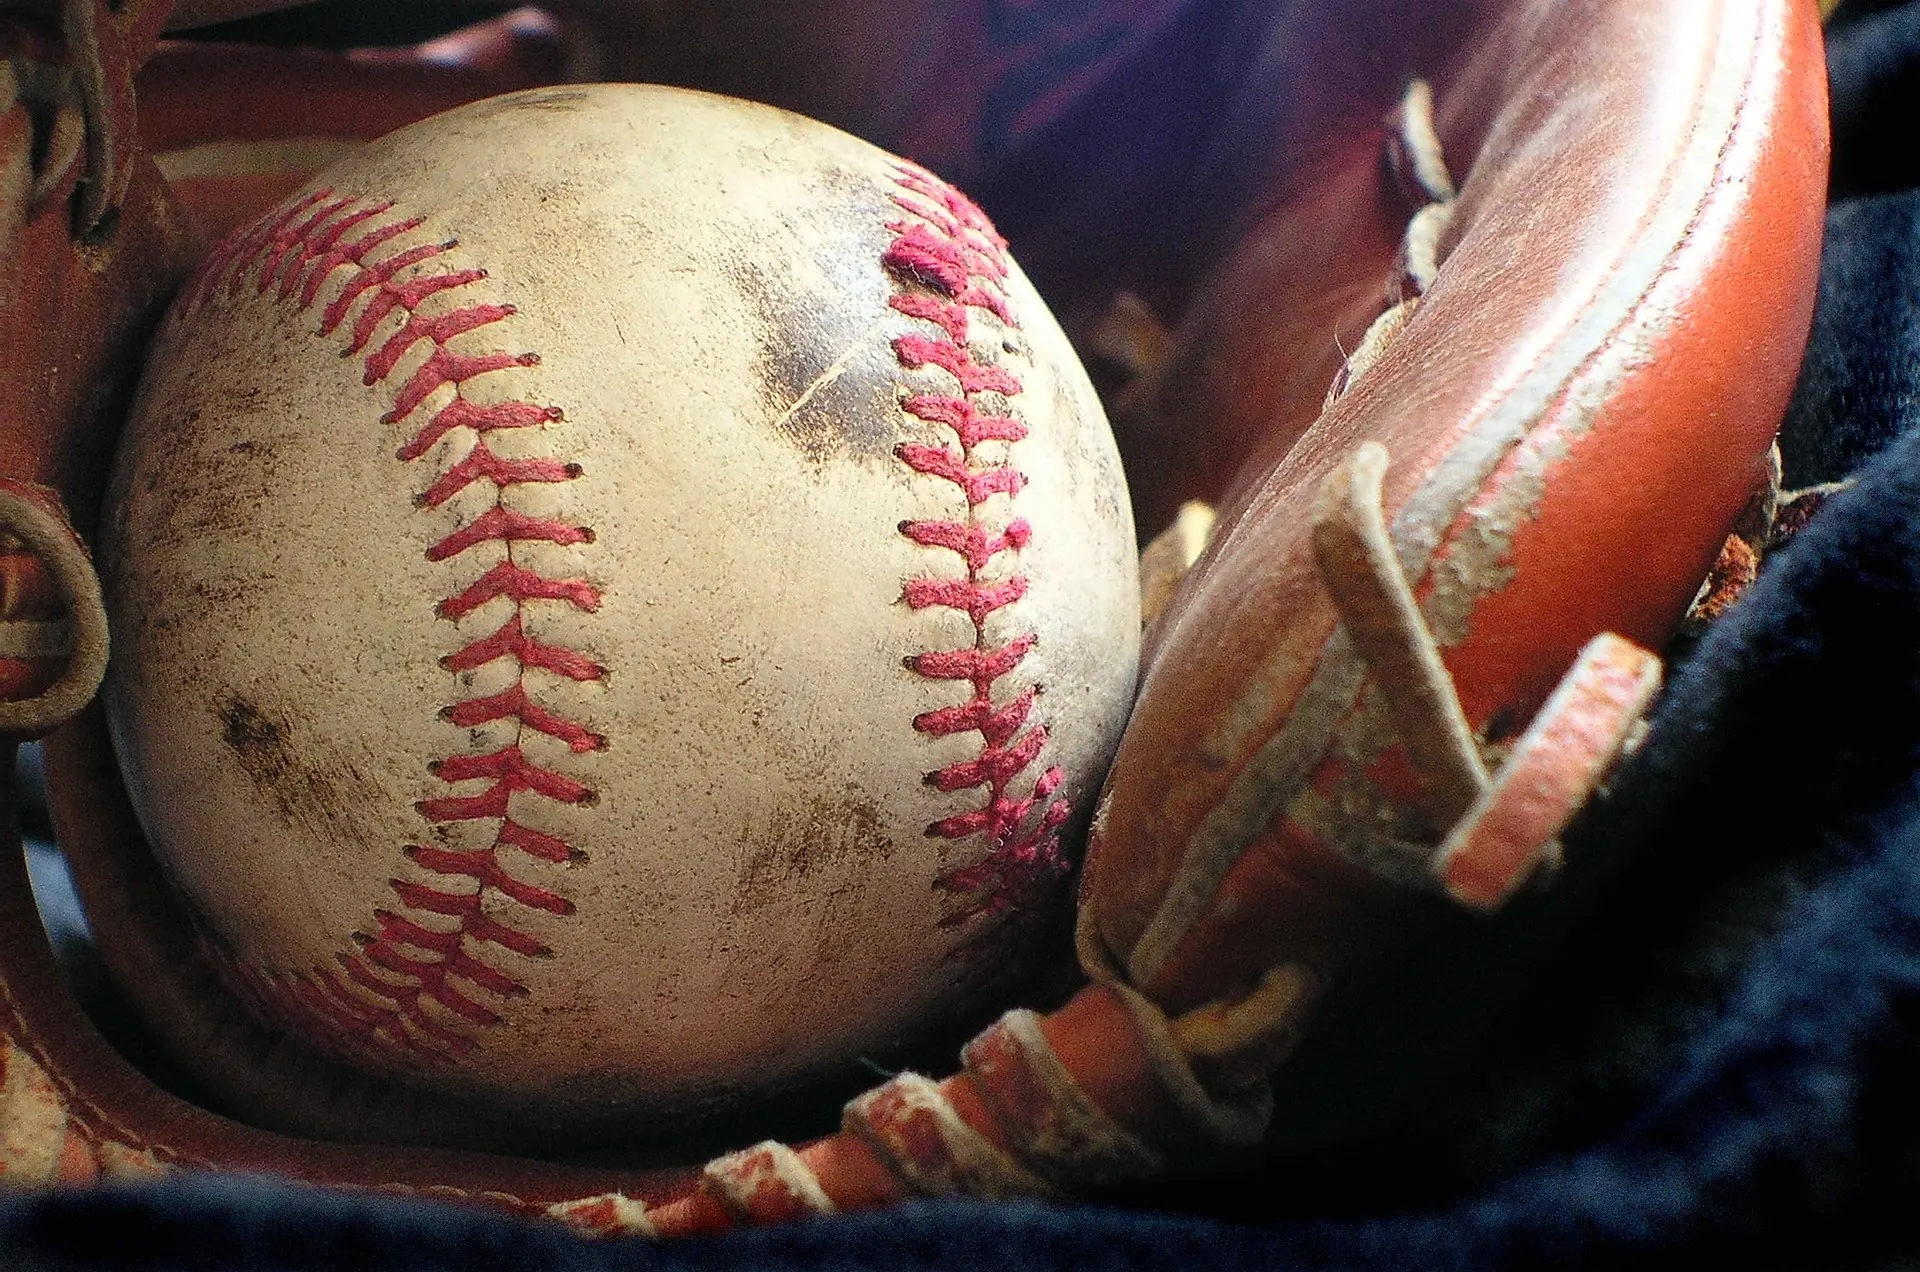 Baseball and baseball glove